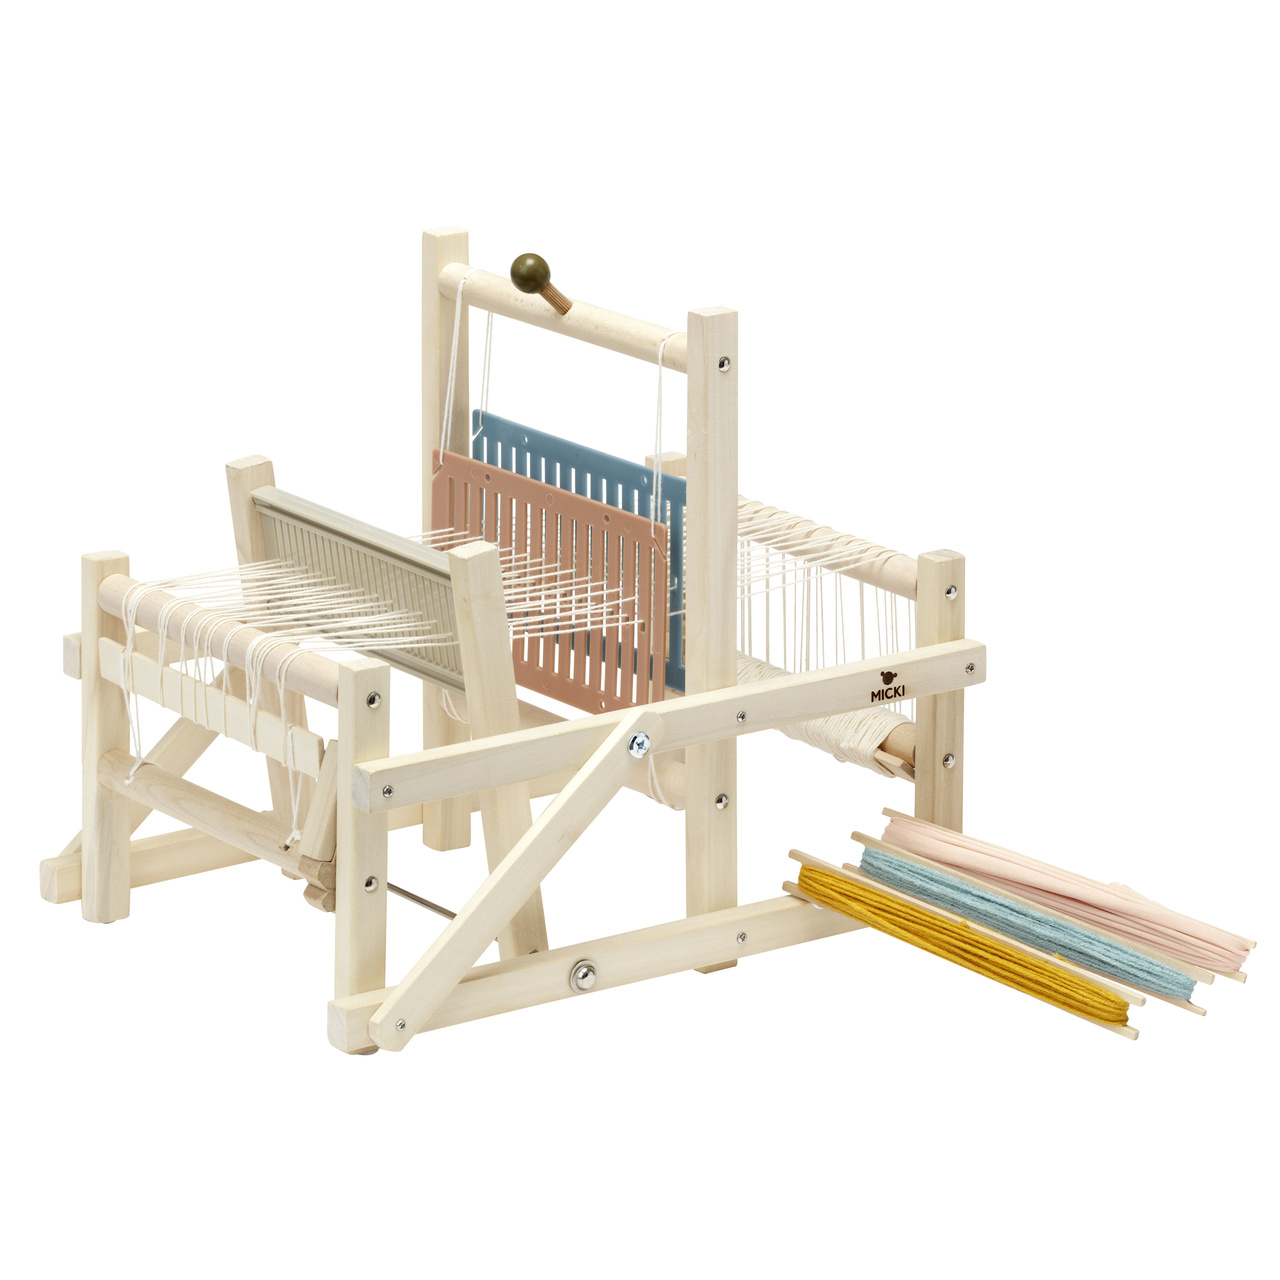 Arts and Craft micki weaving loom